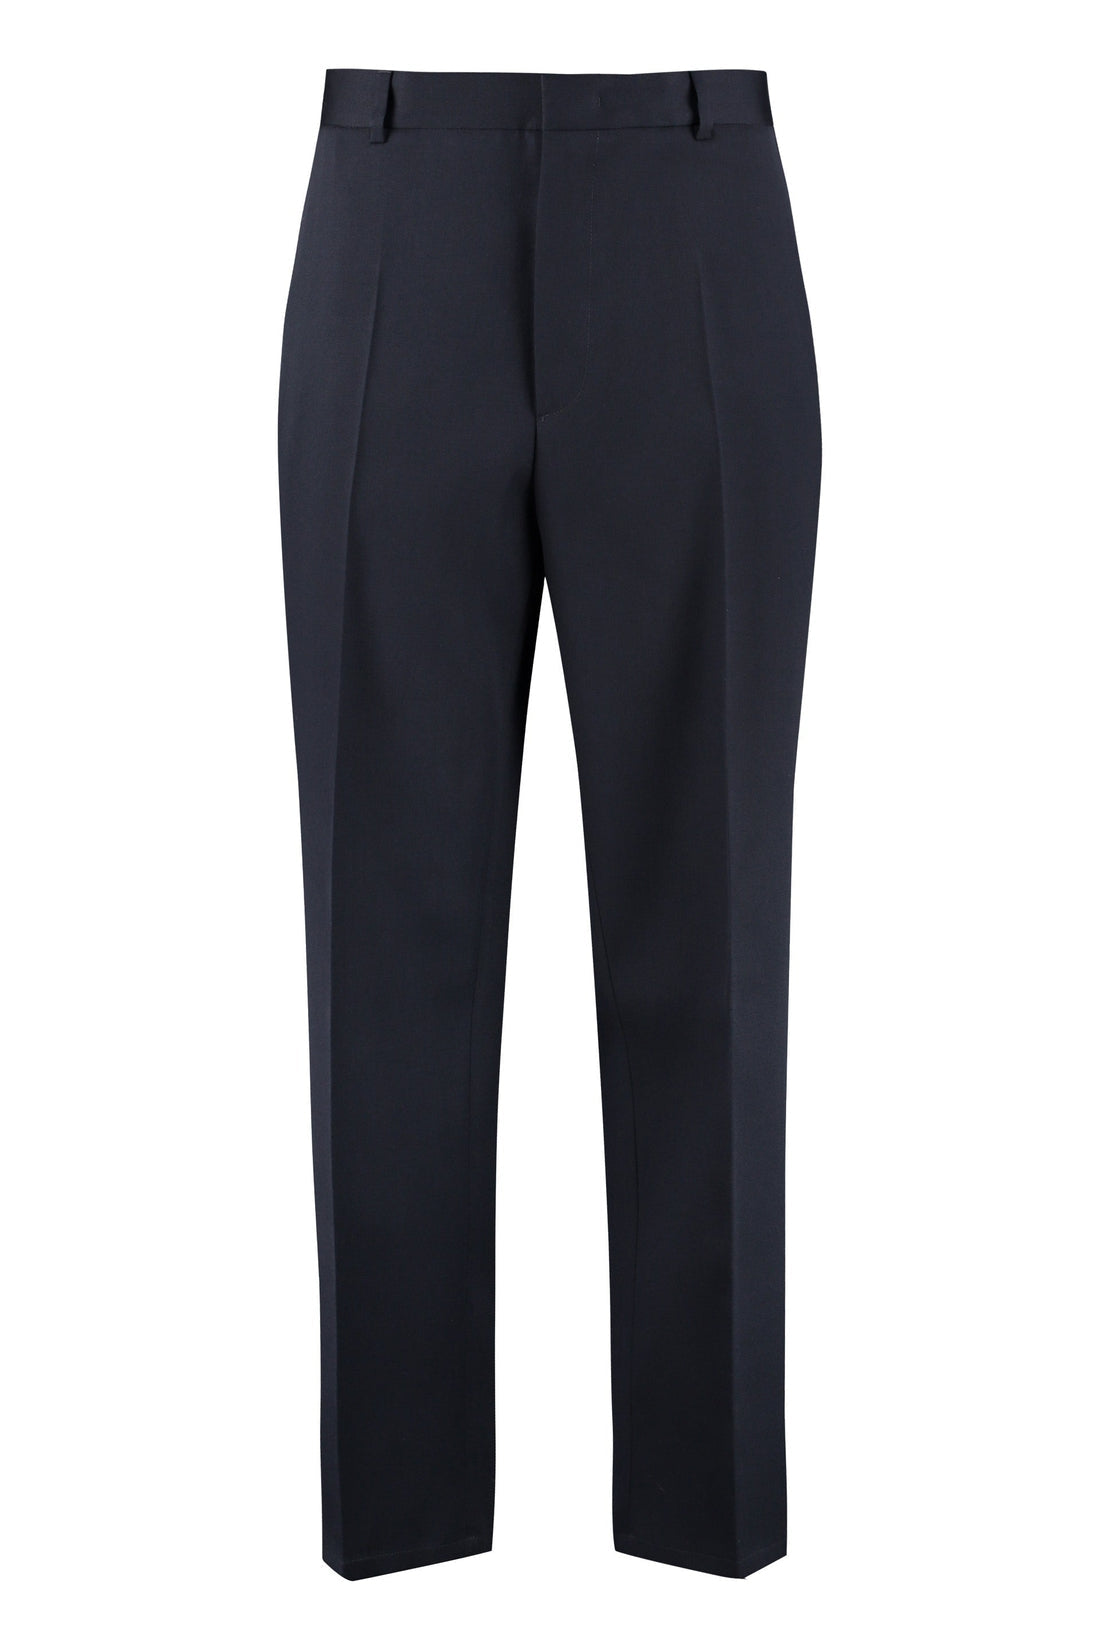 Jil Sander-OUTLET-SALE-Tailored trousers-ARCHIVIST